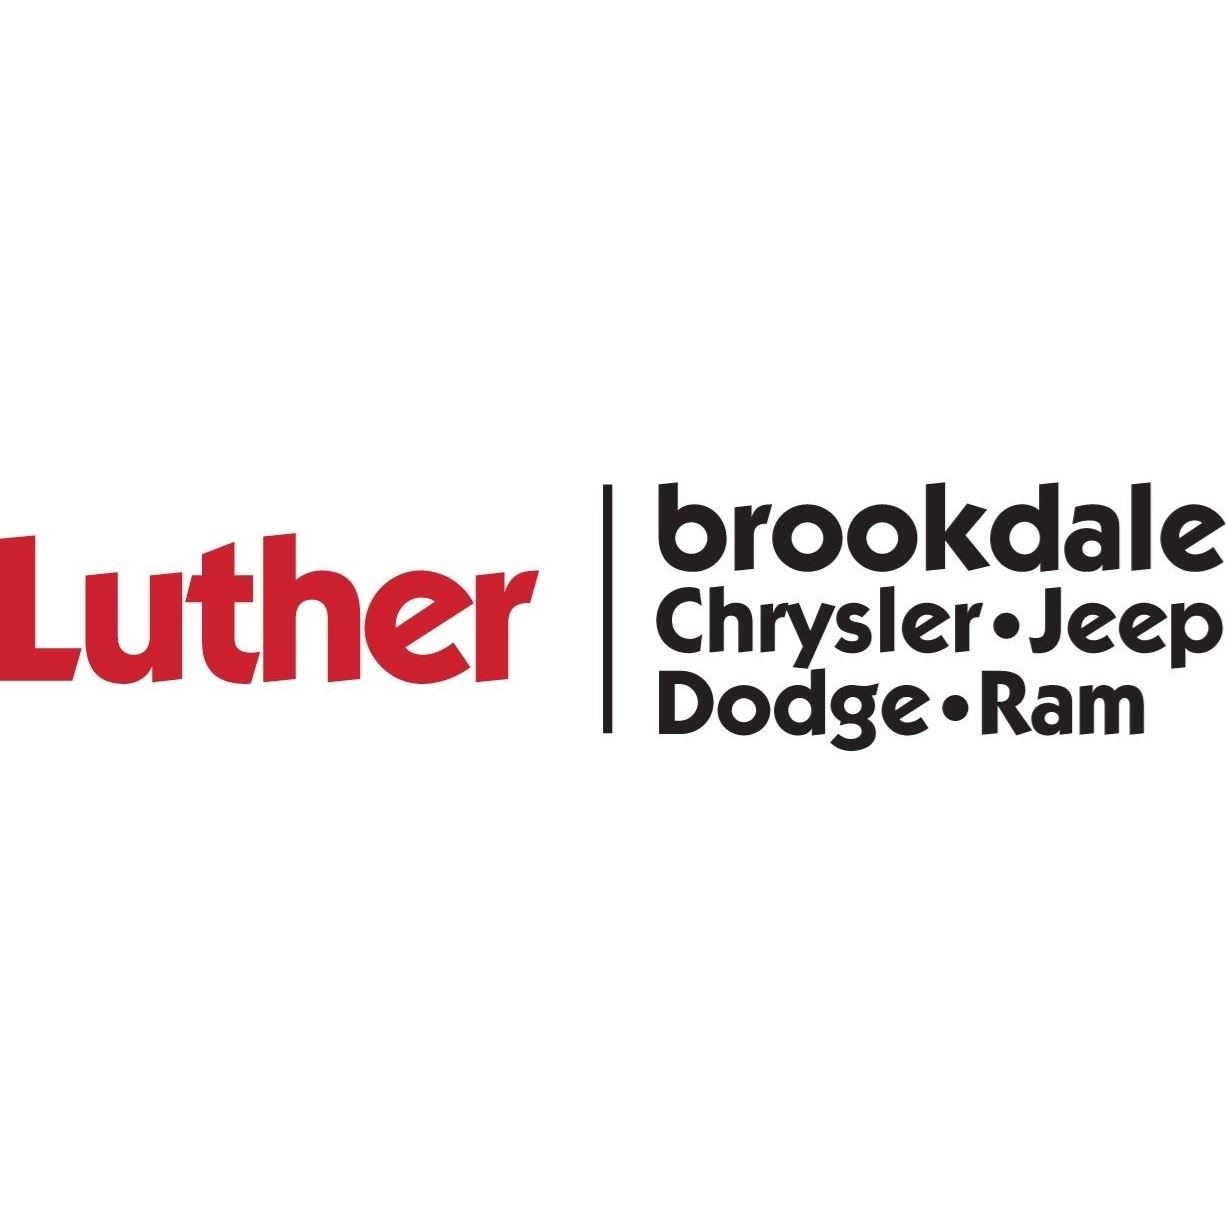 Luther Brookdale Chrysler*Jeep*Dodge*Ram